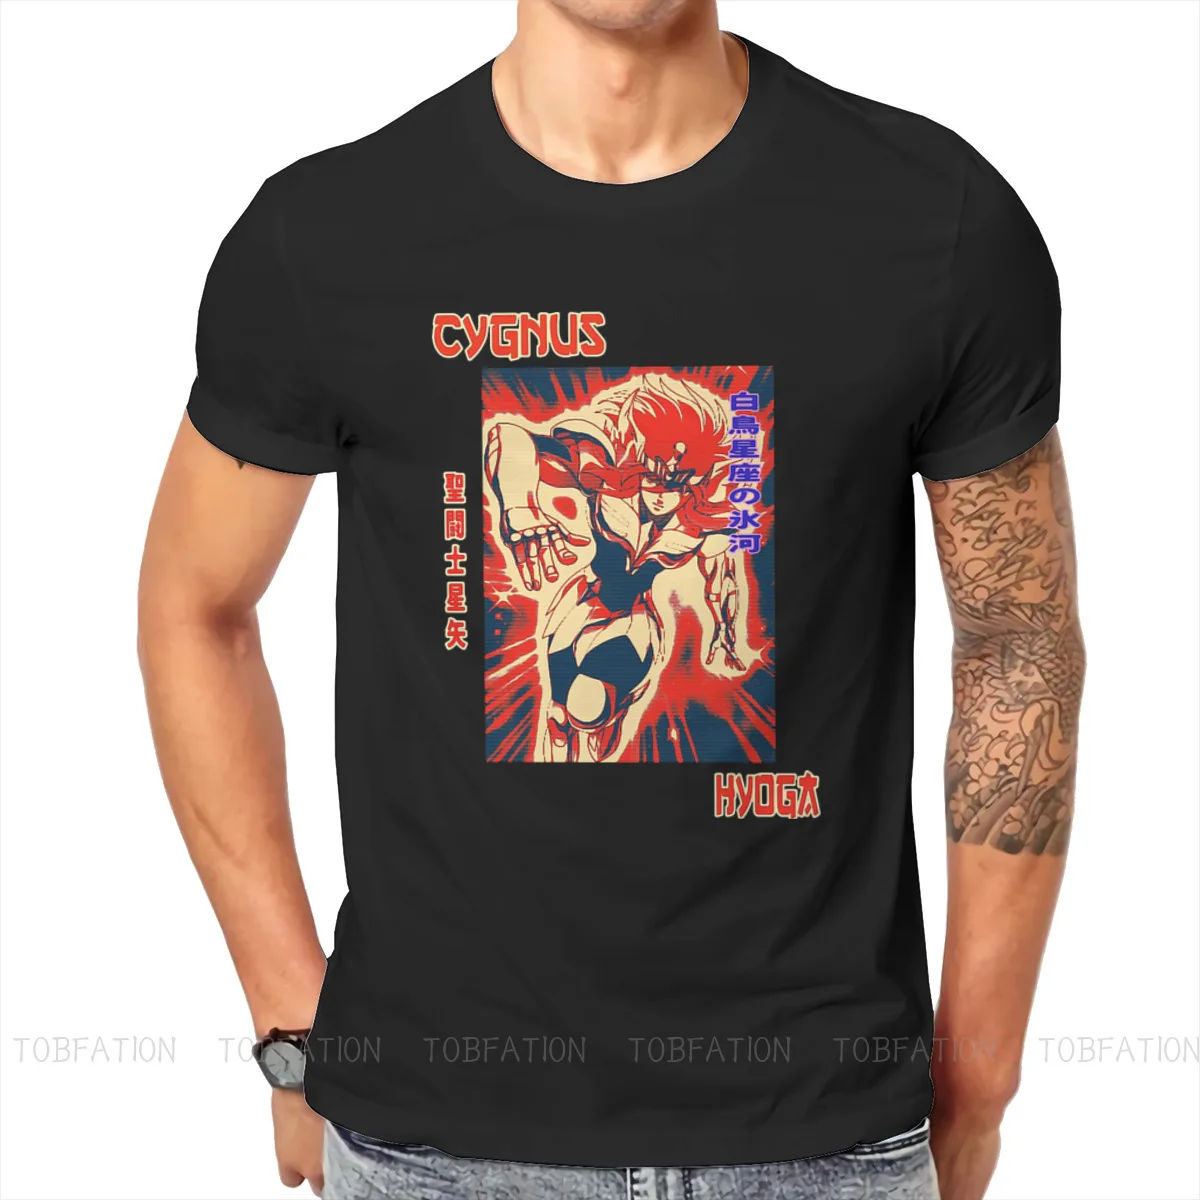 

Cygnus Hyoga Hipster TShirts Saint Seiya Knights of the Zodiac Cosmo Athena Anime Male Graphic Streetwear T Shirt Big Size